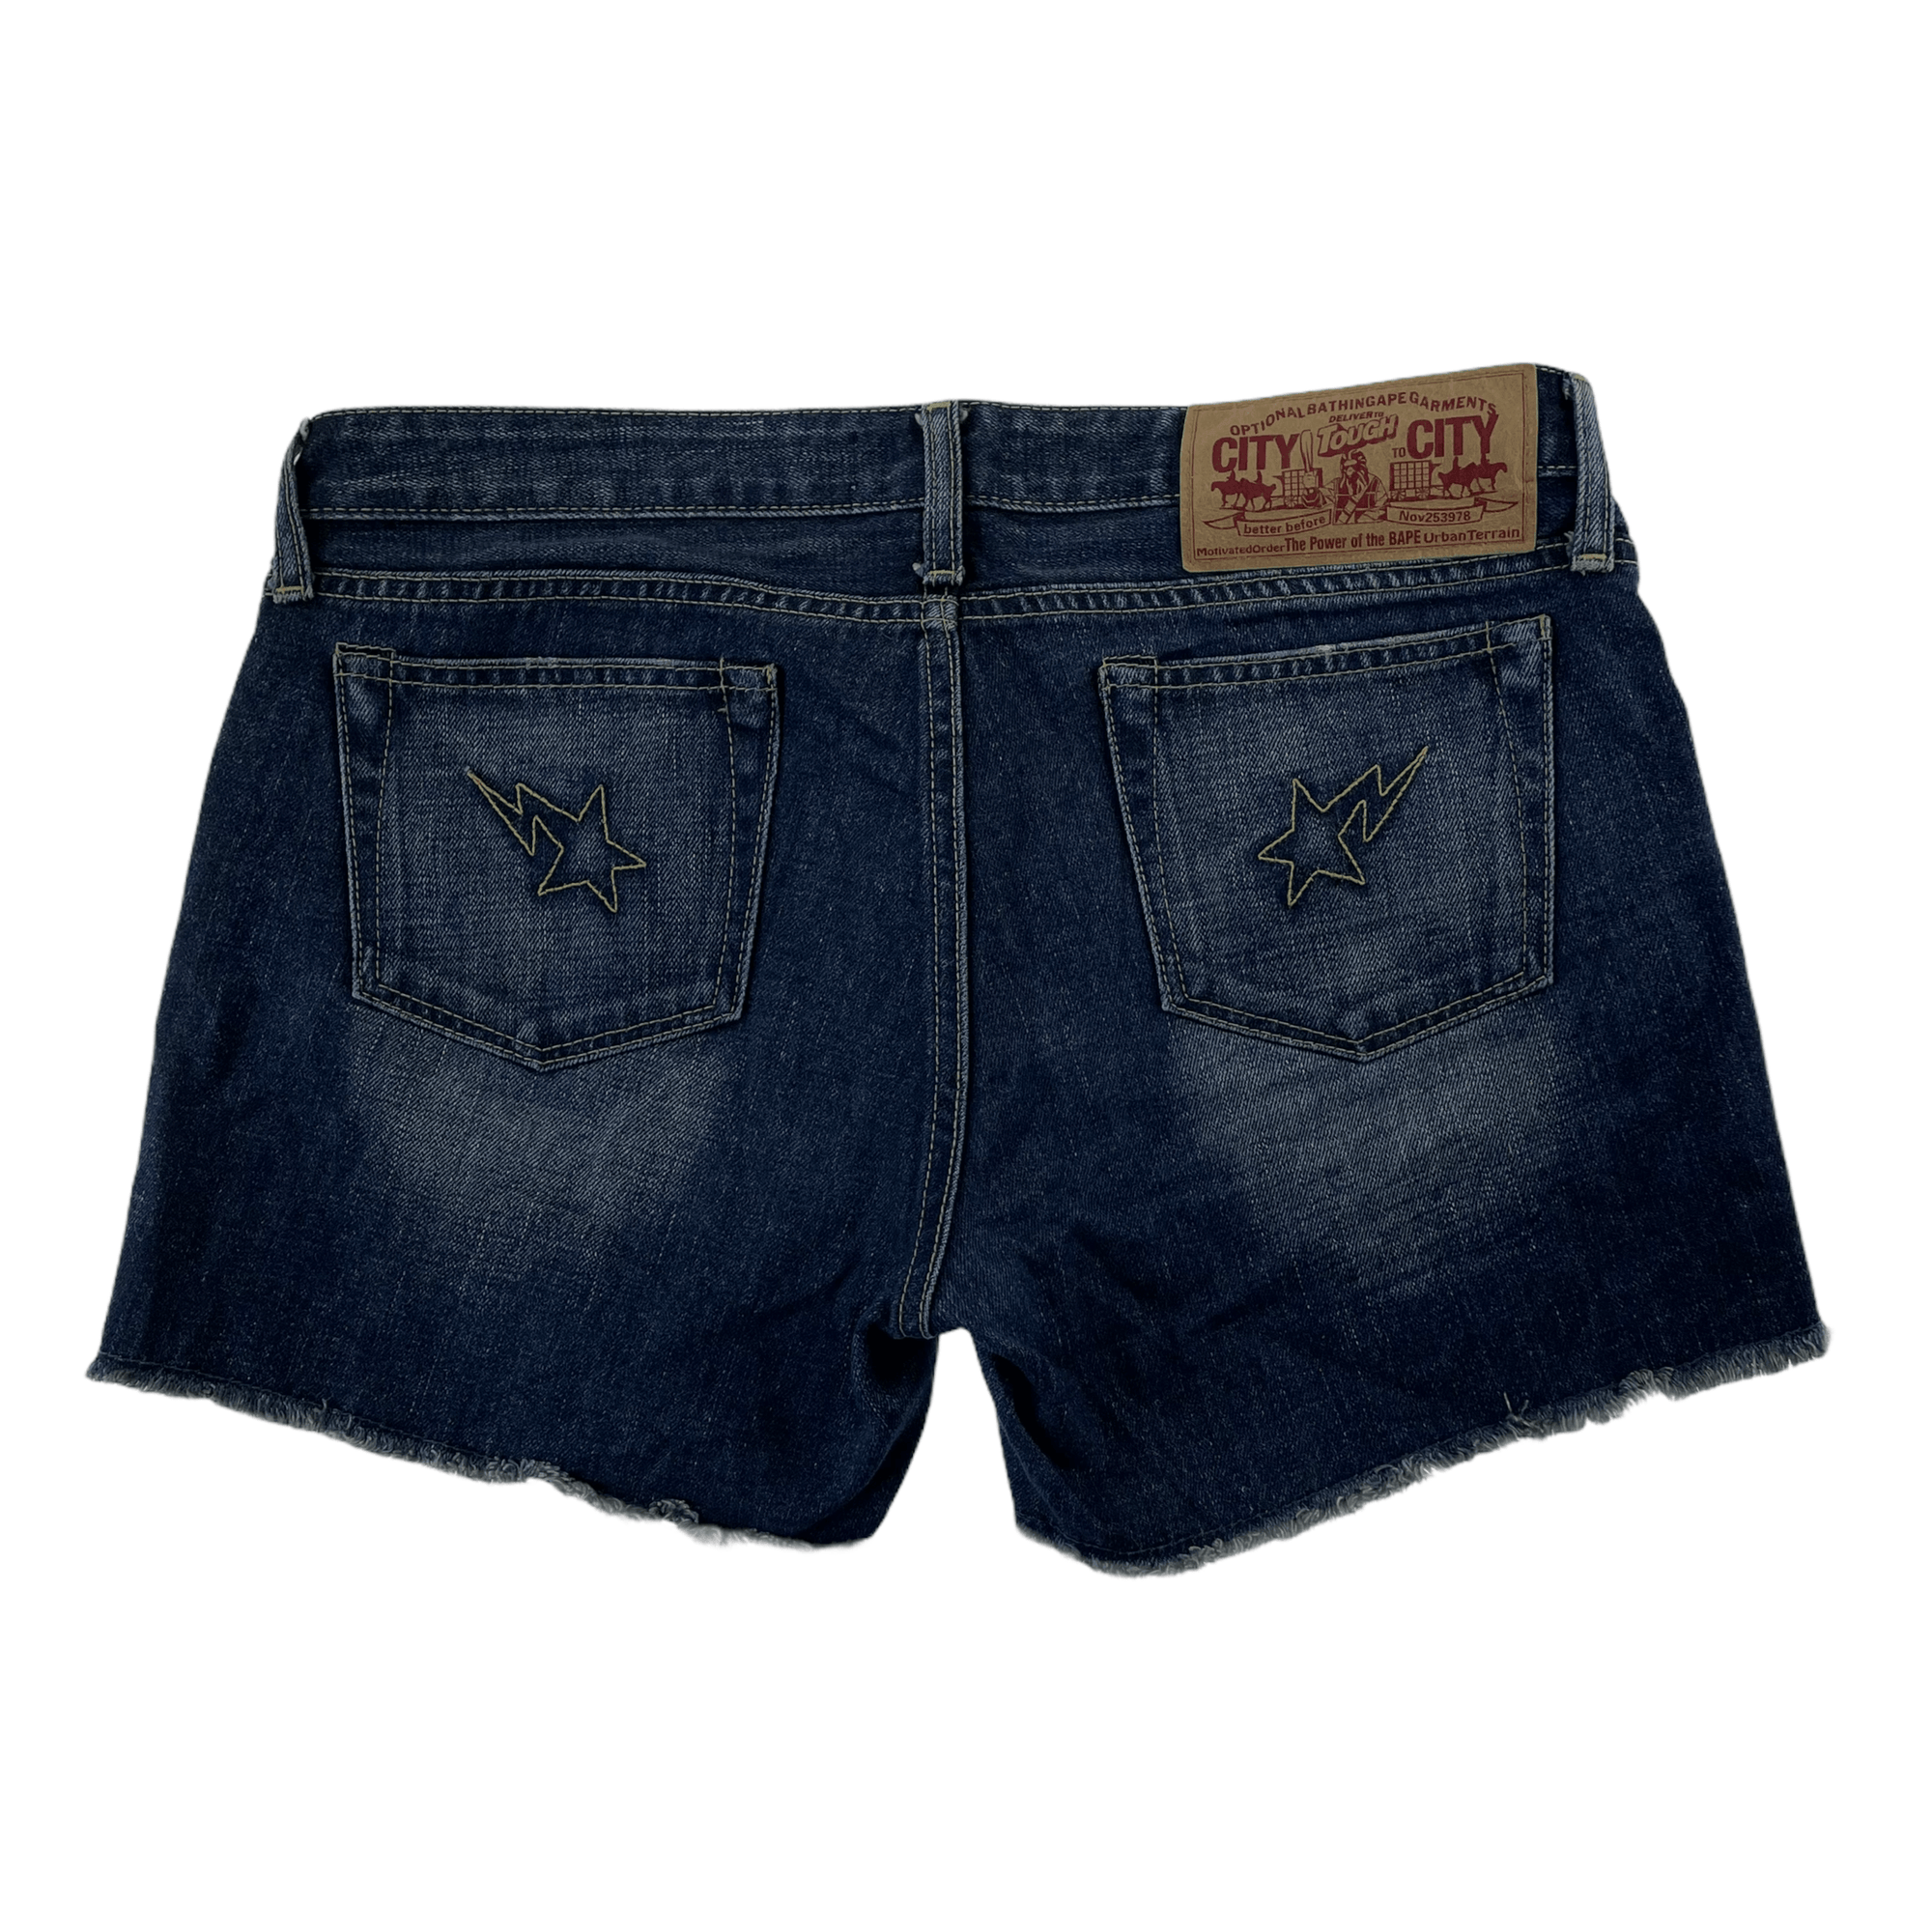 Bape sta denim short shorts W32 - second wave vintage store